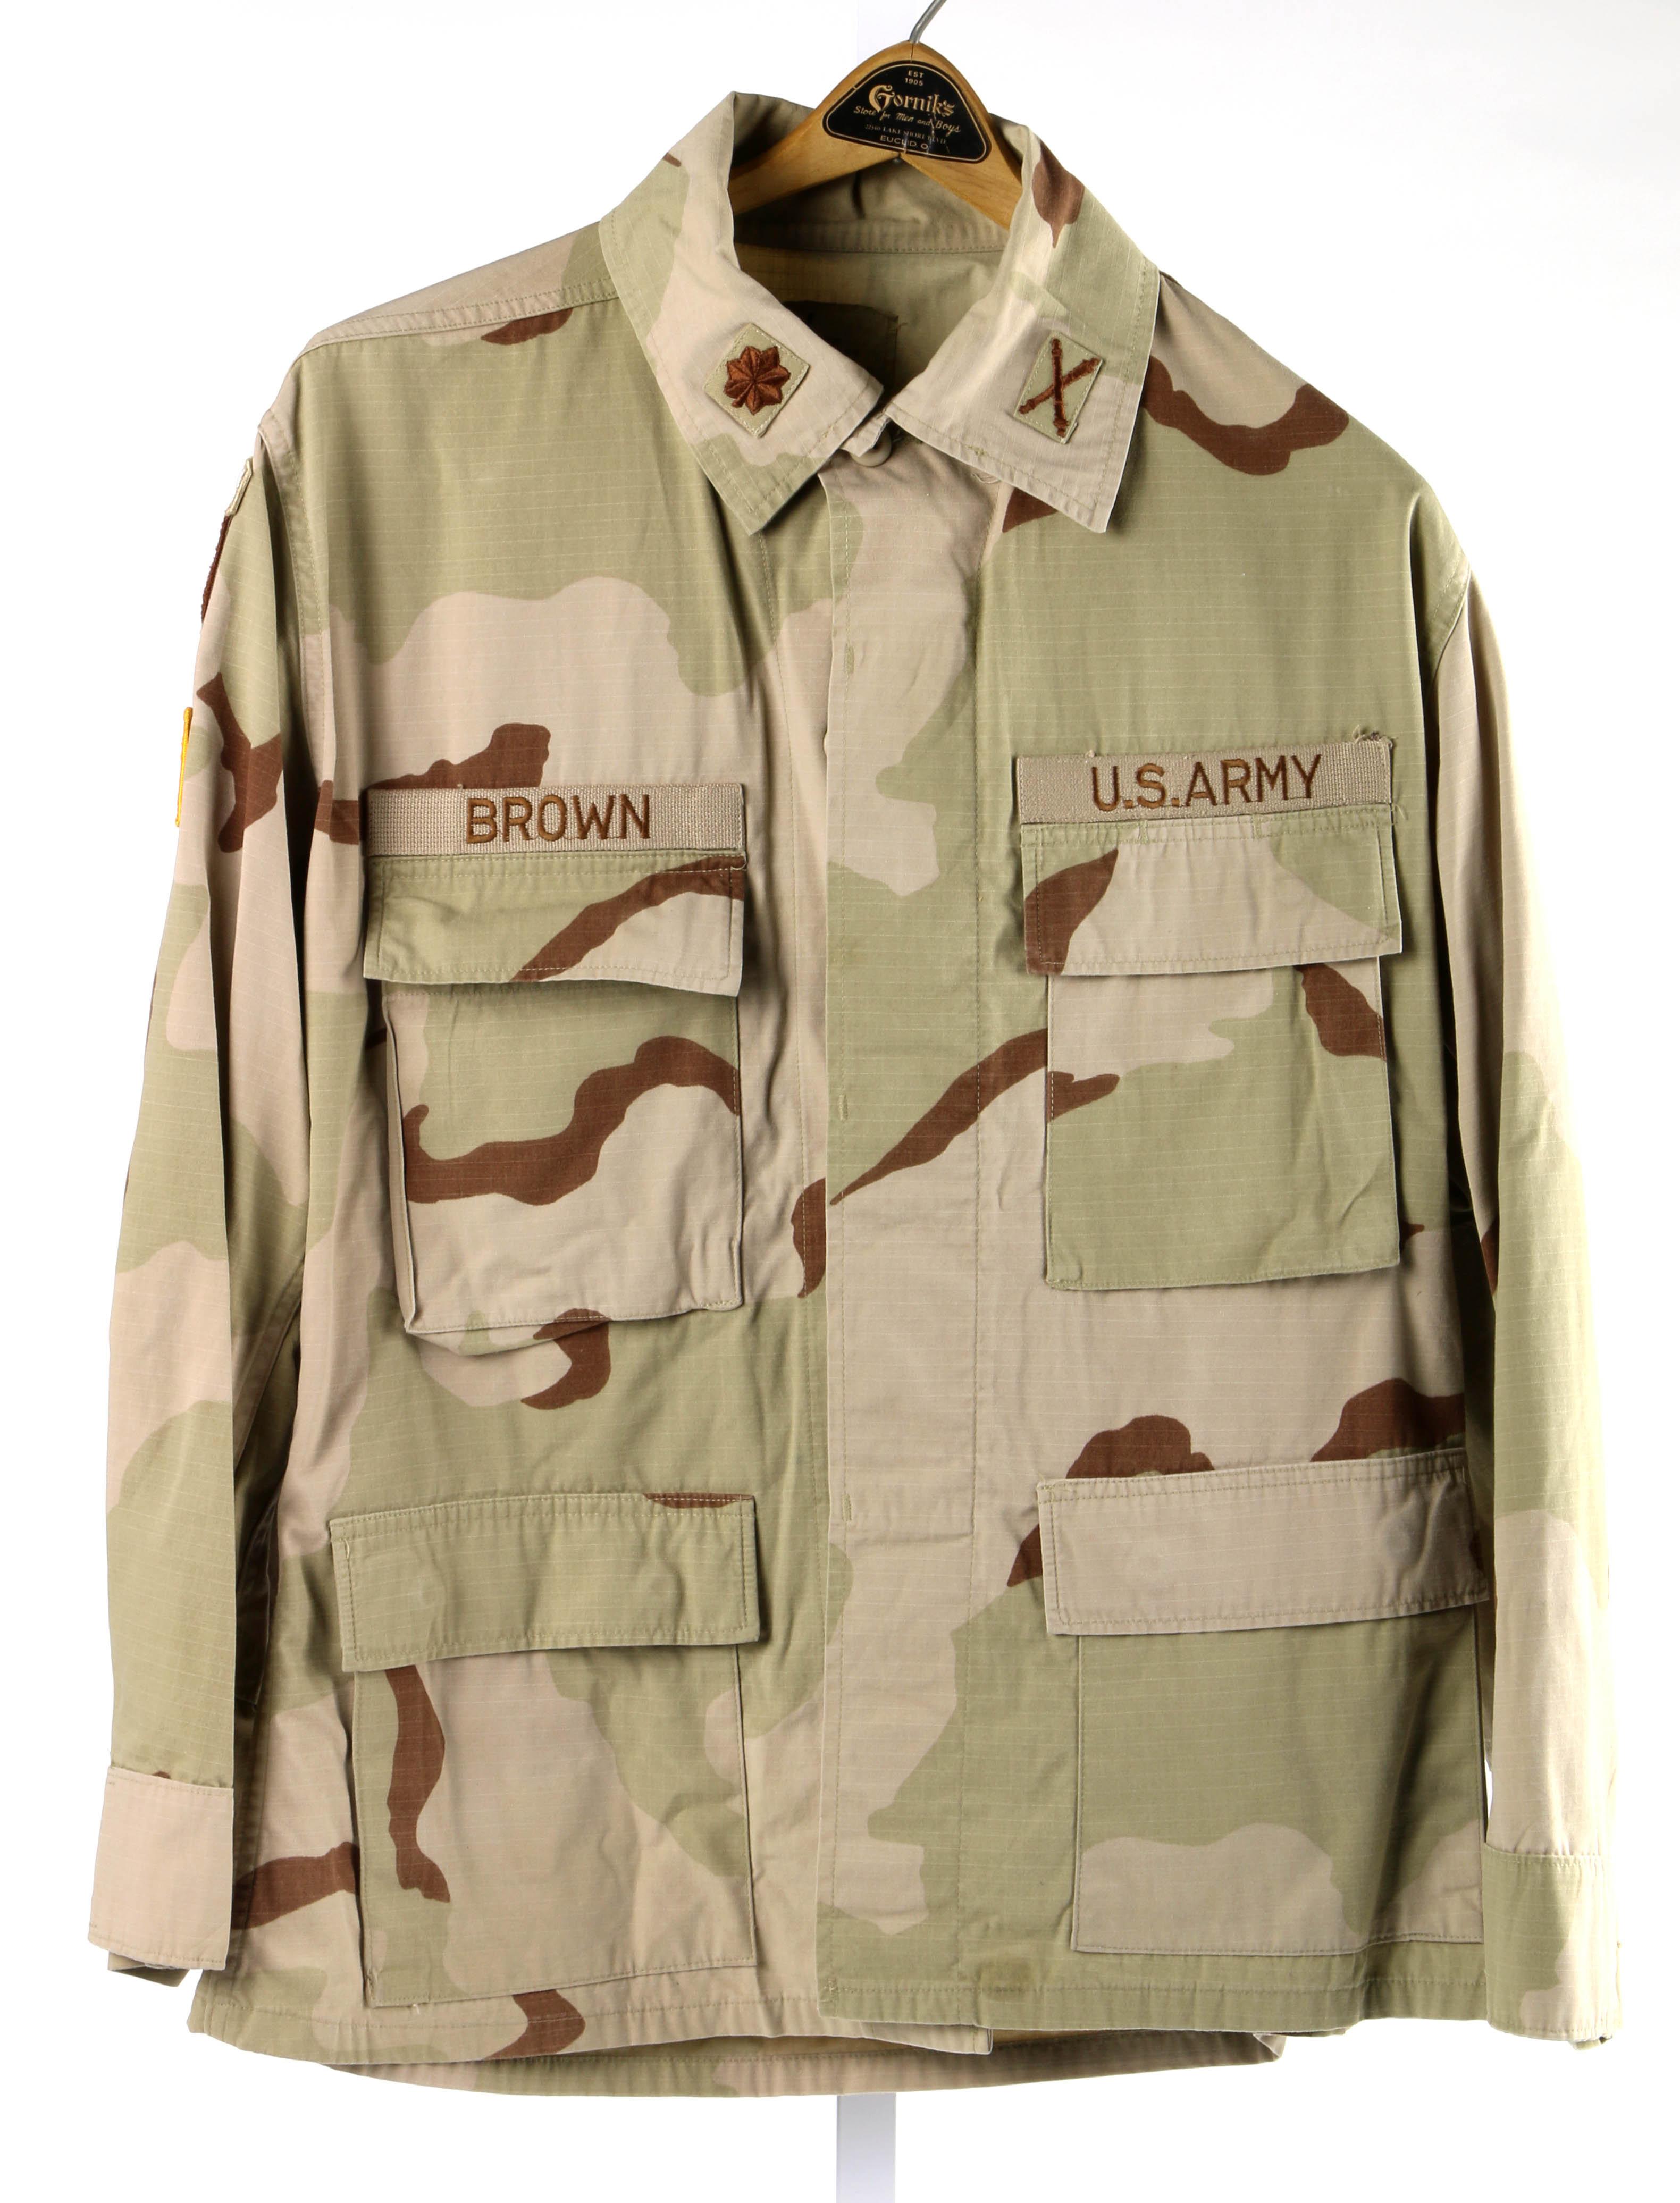 U.S. Army Desert Camo Jacket & Pants